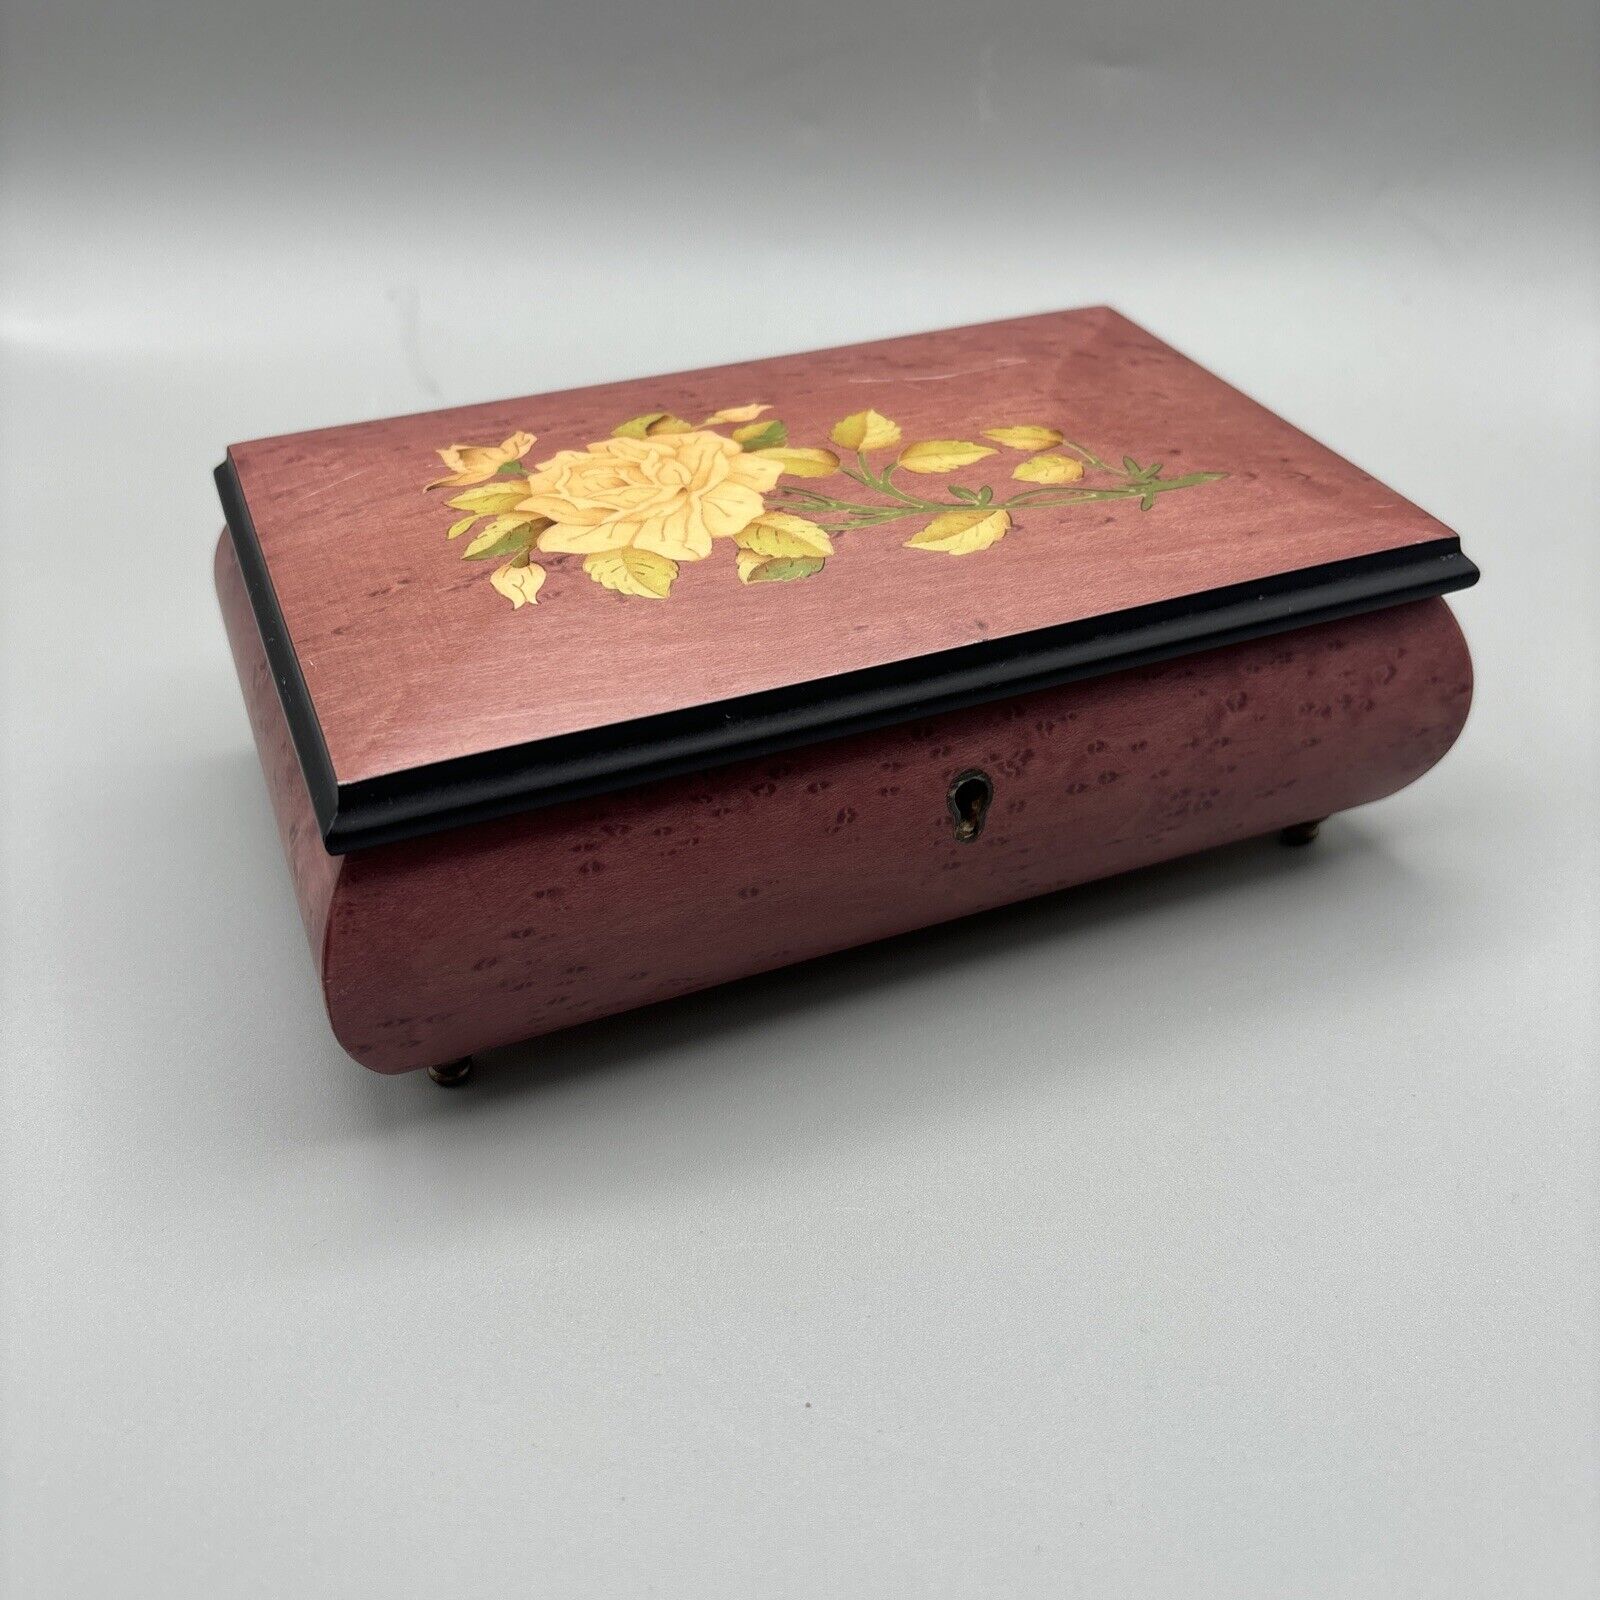 Working Vintage Music Box Italian Wood Inlay.  Rose Tone Wood - No Key